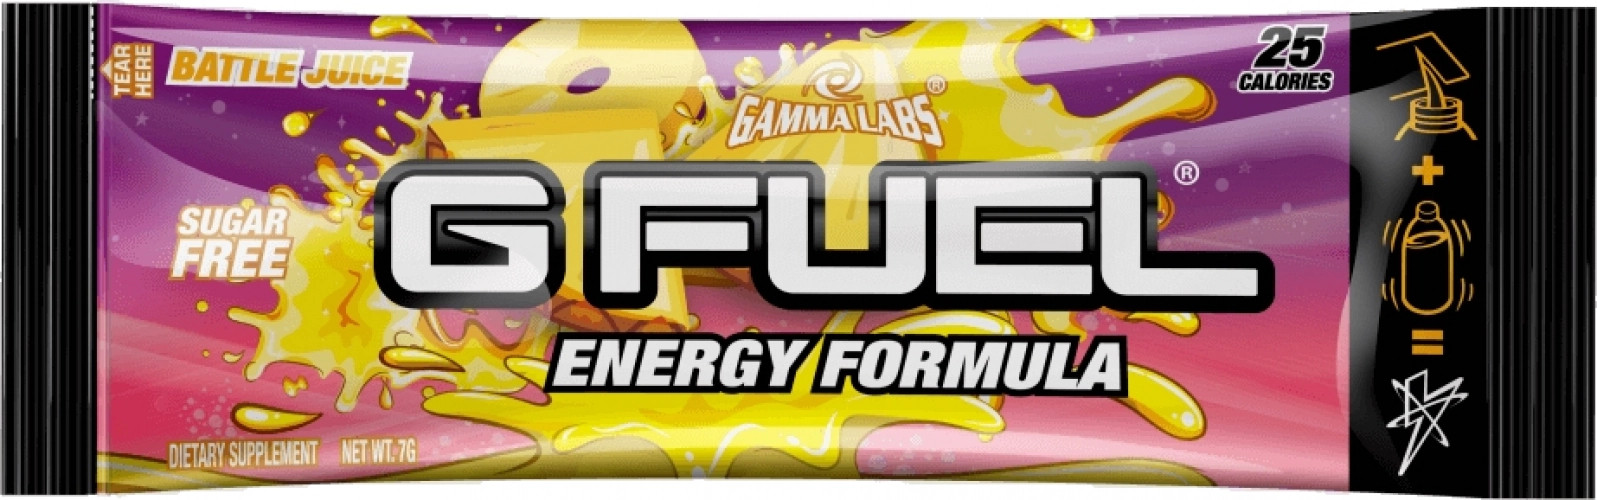 GFuel Energy Formula - Battle Juice Sample